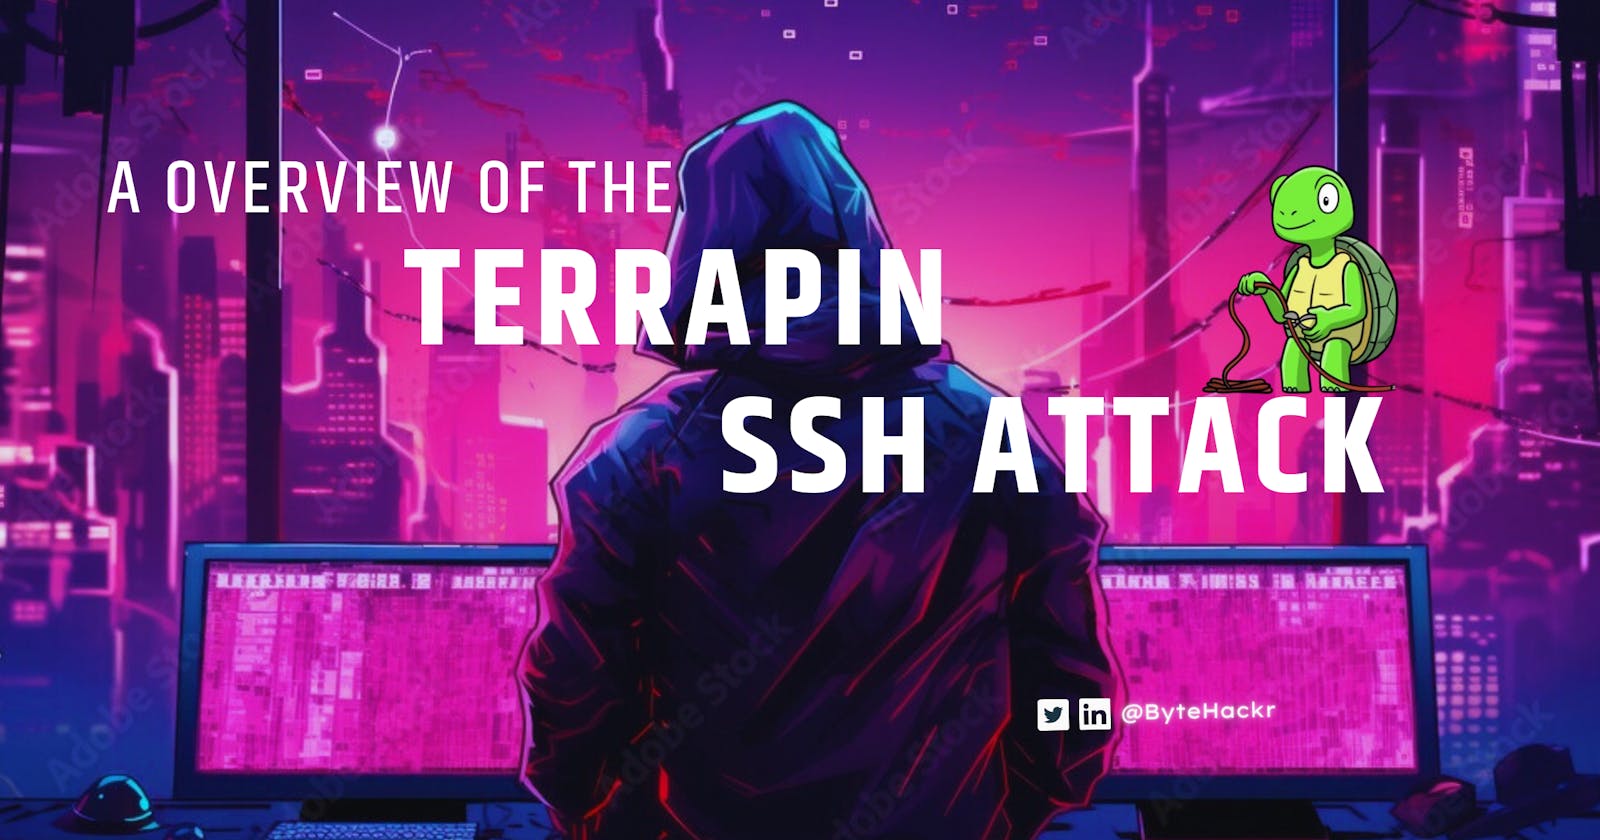 Terrapin SSH Attack: An Overview